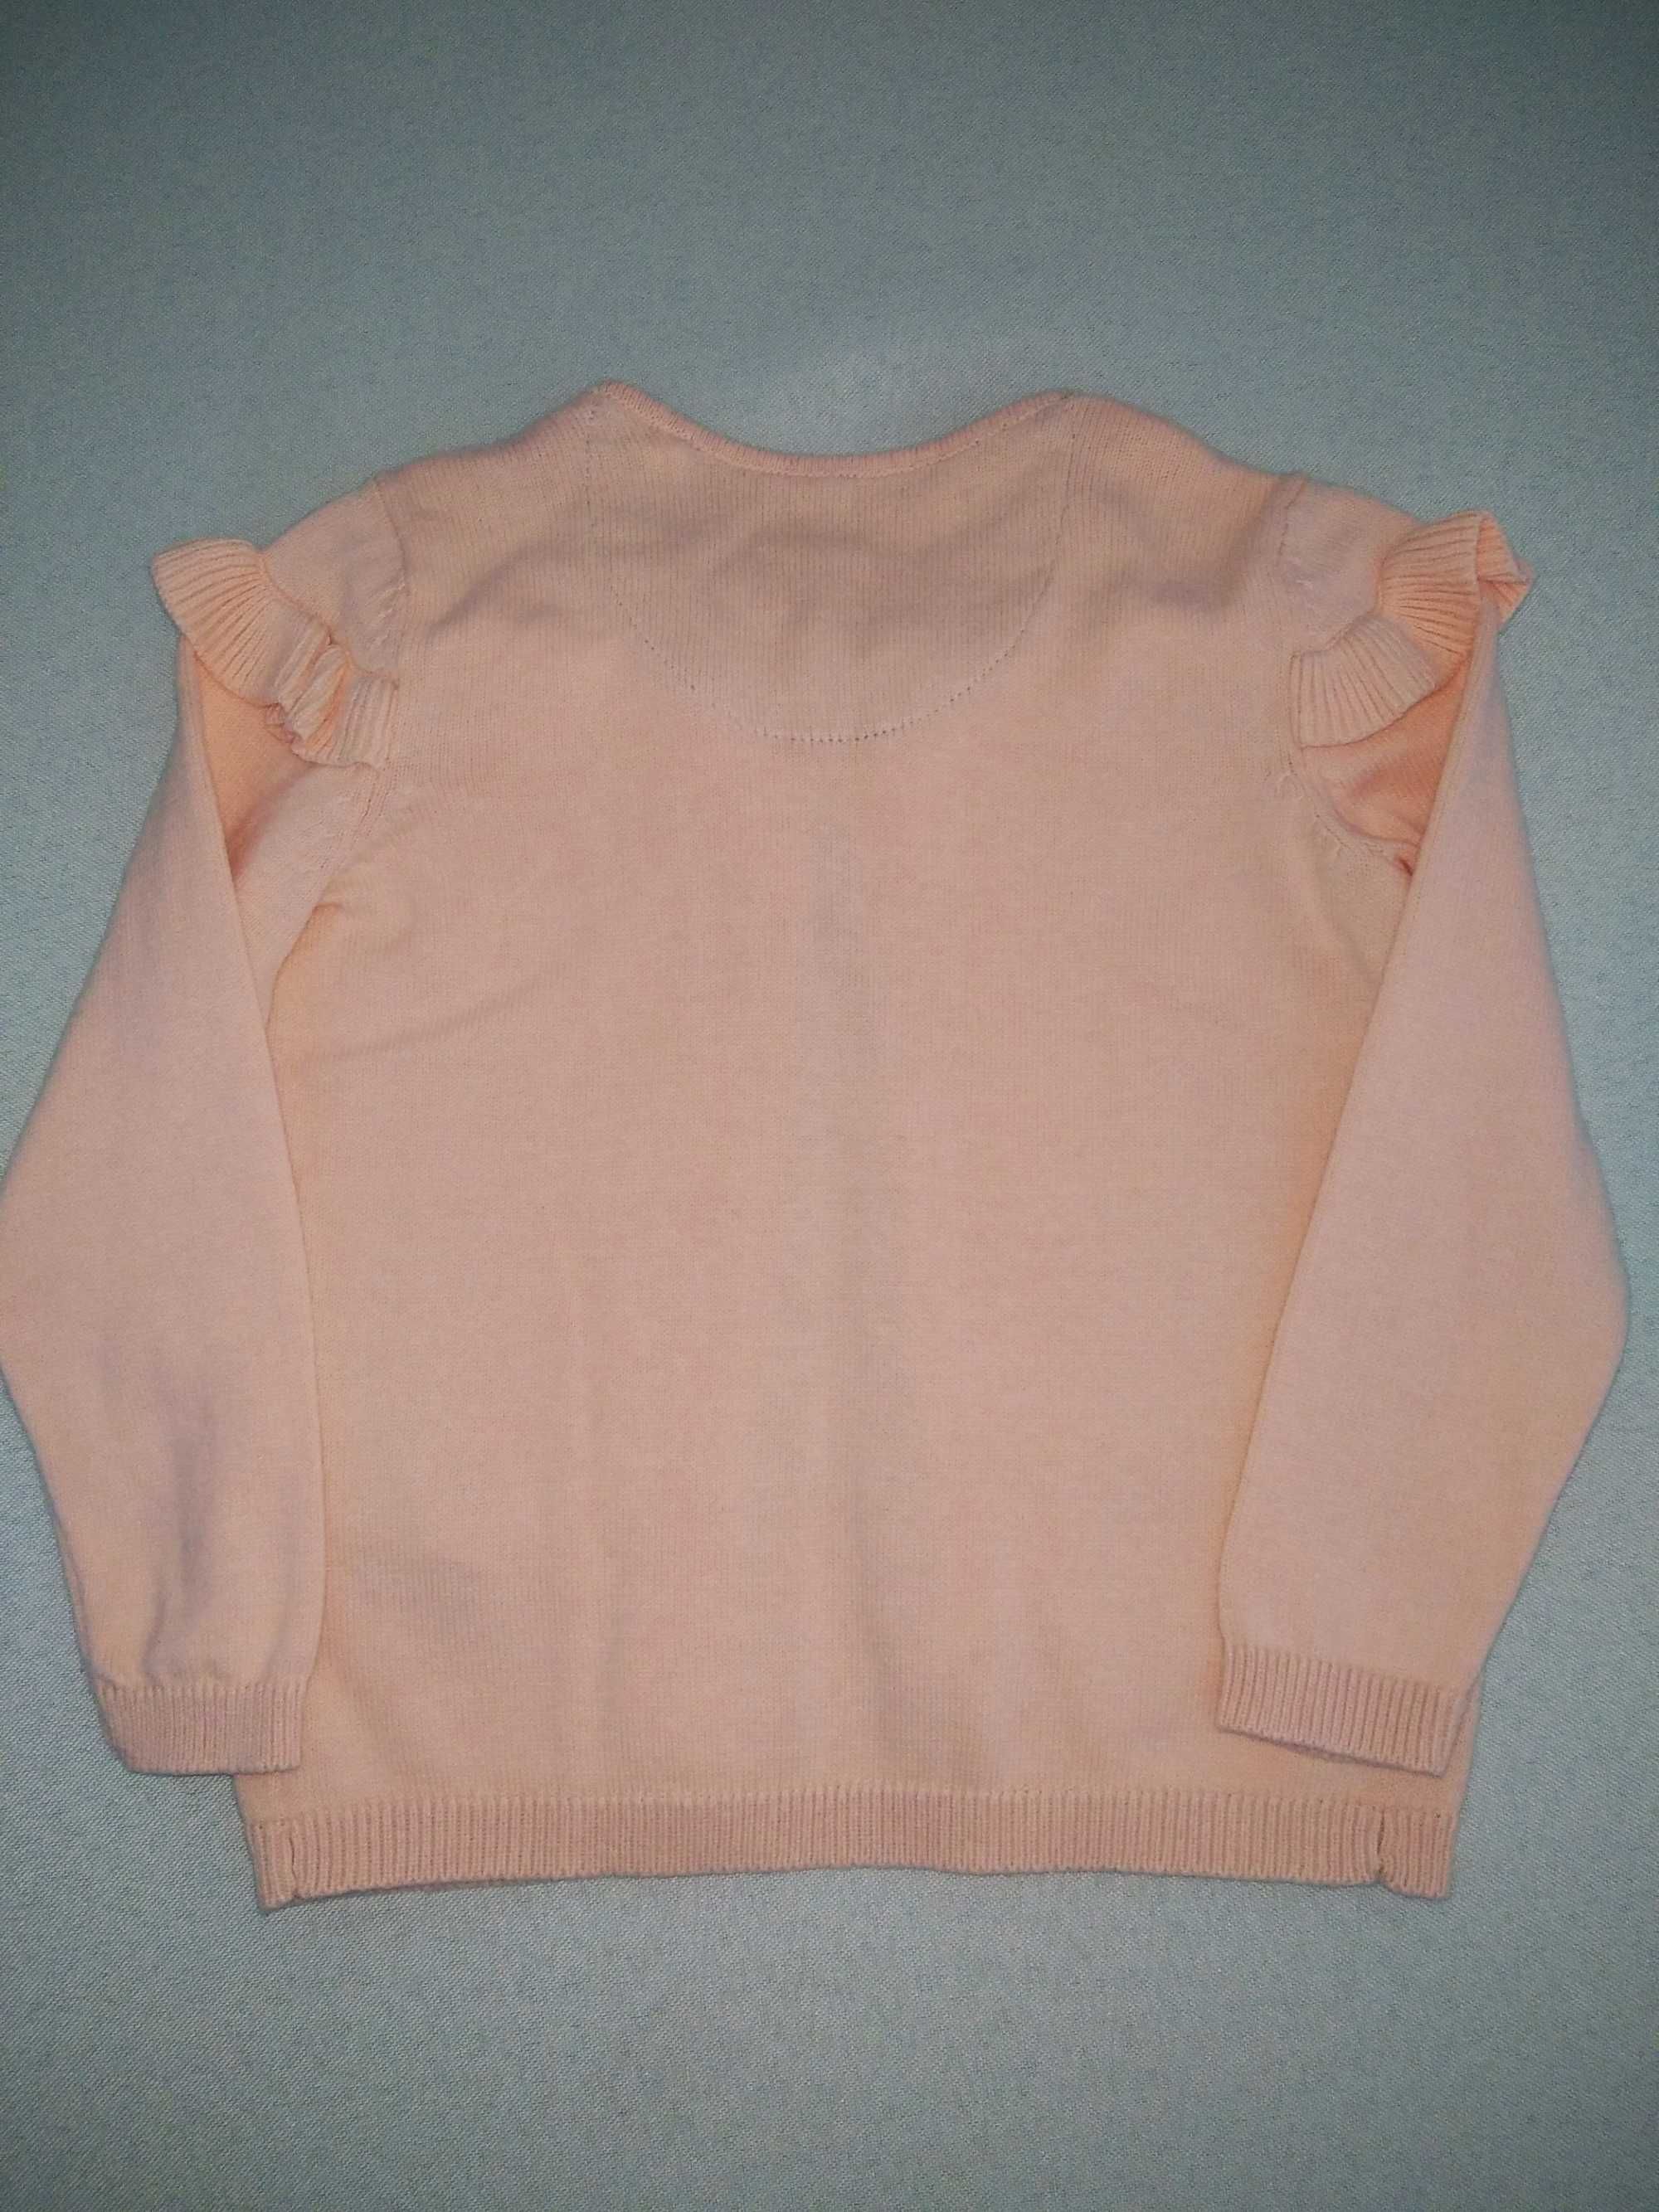 Sweterek roz. 86-92